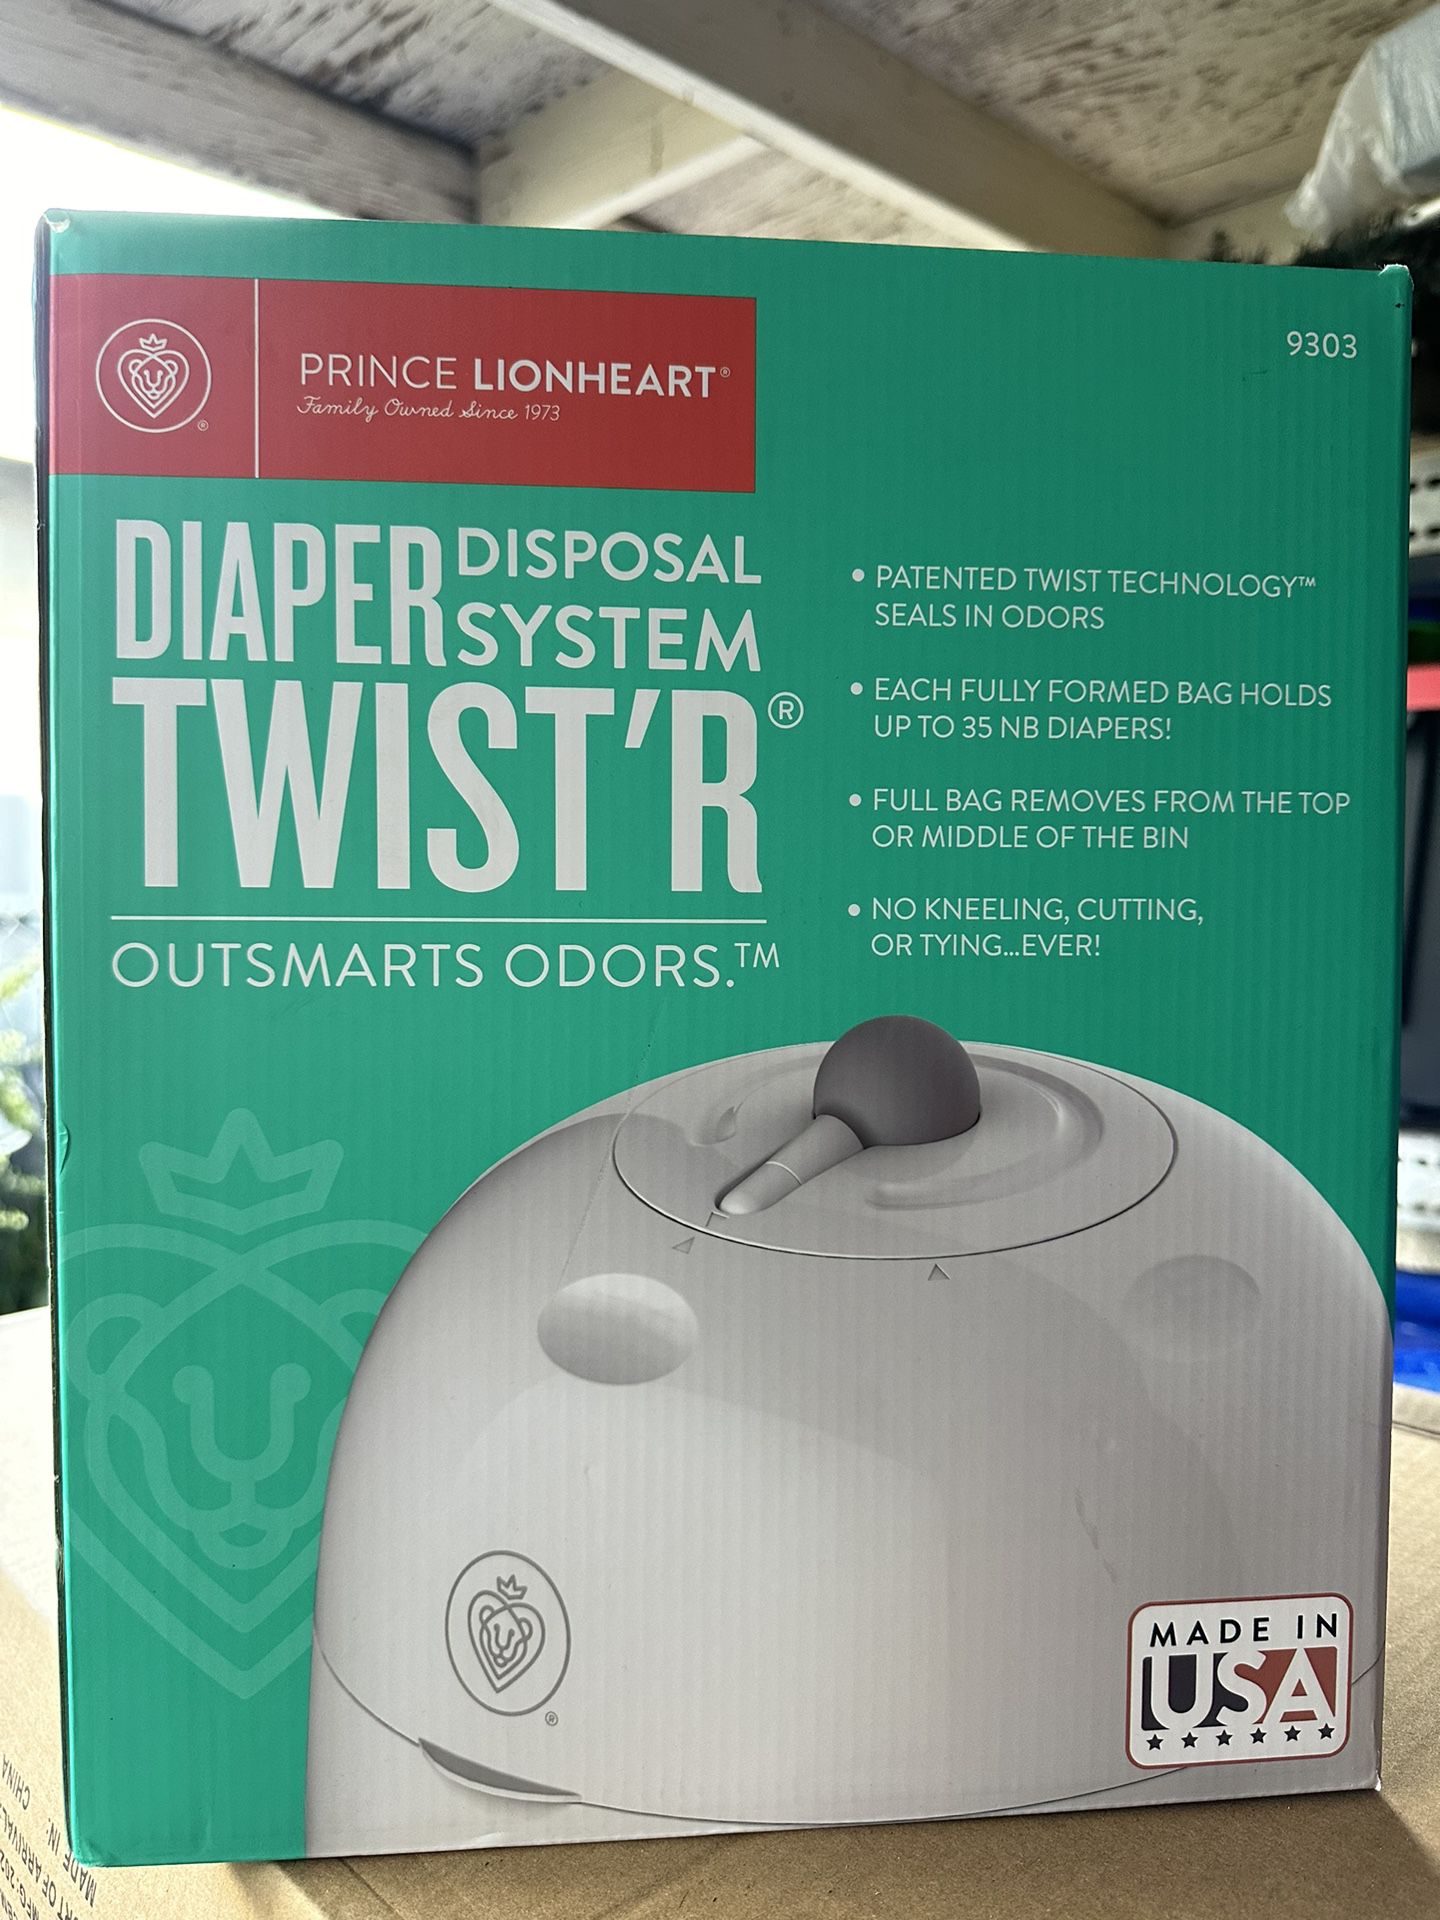 Diaper Disposal System Twister 